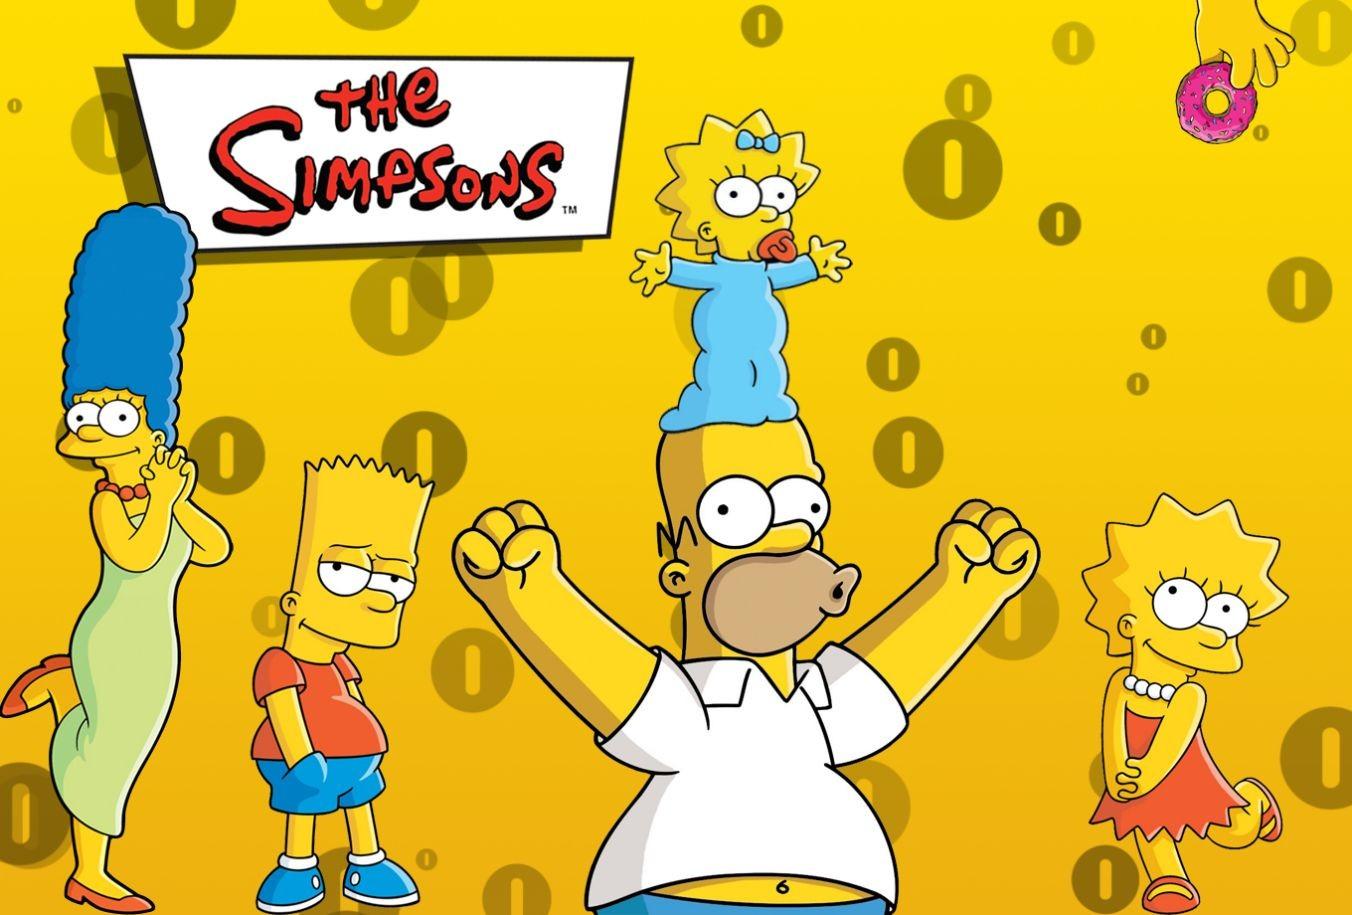 The Simpsons, Marge Simpson, Bart Simpson, Maggie Simpson, Homer